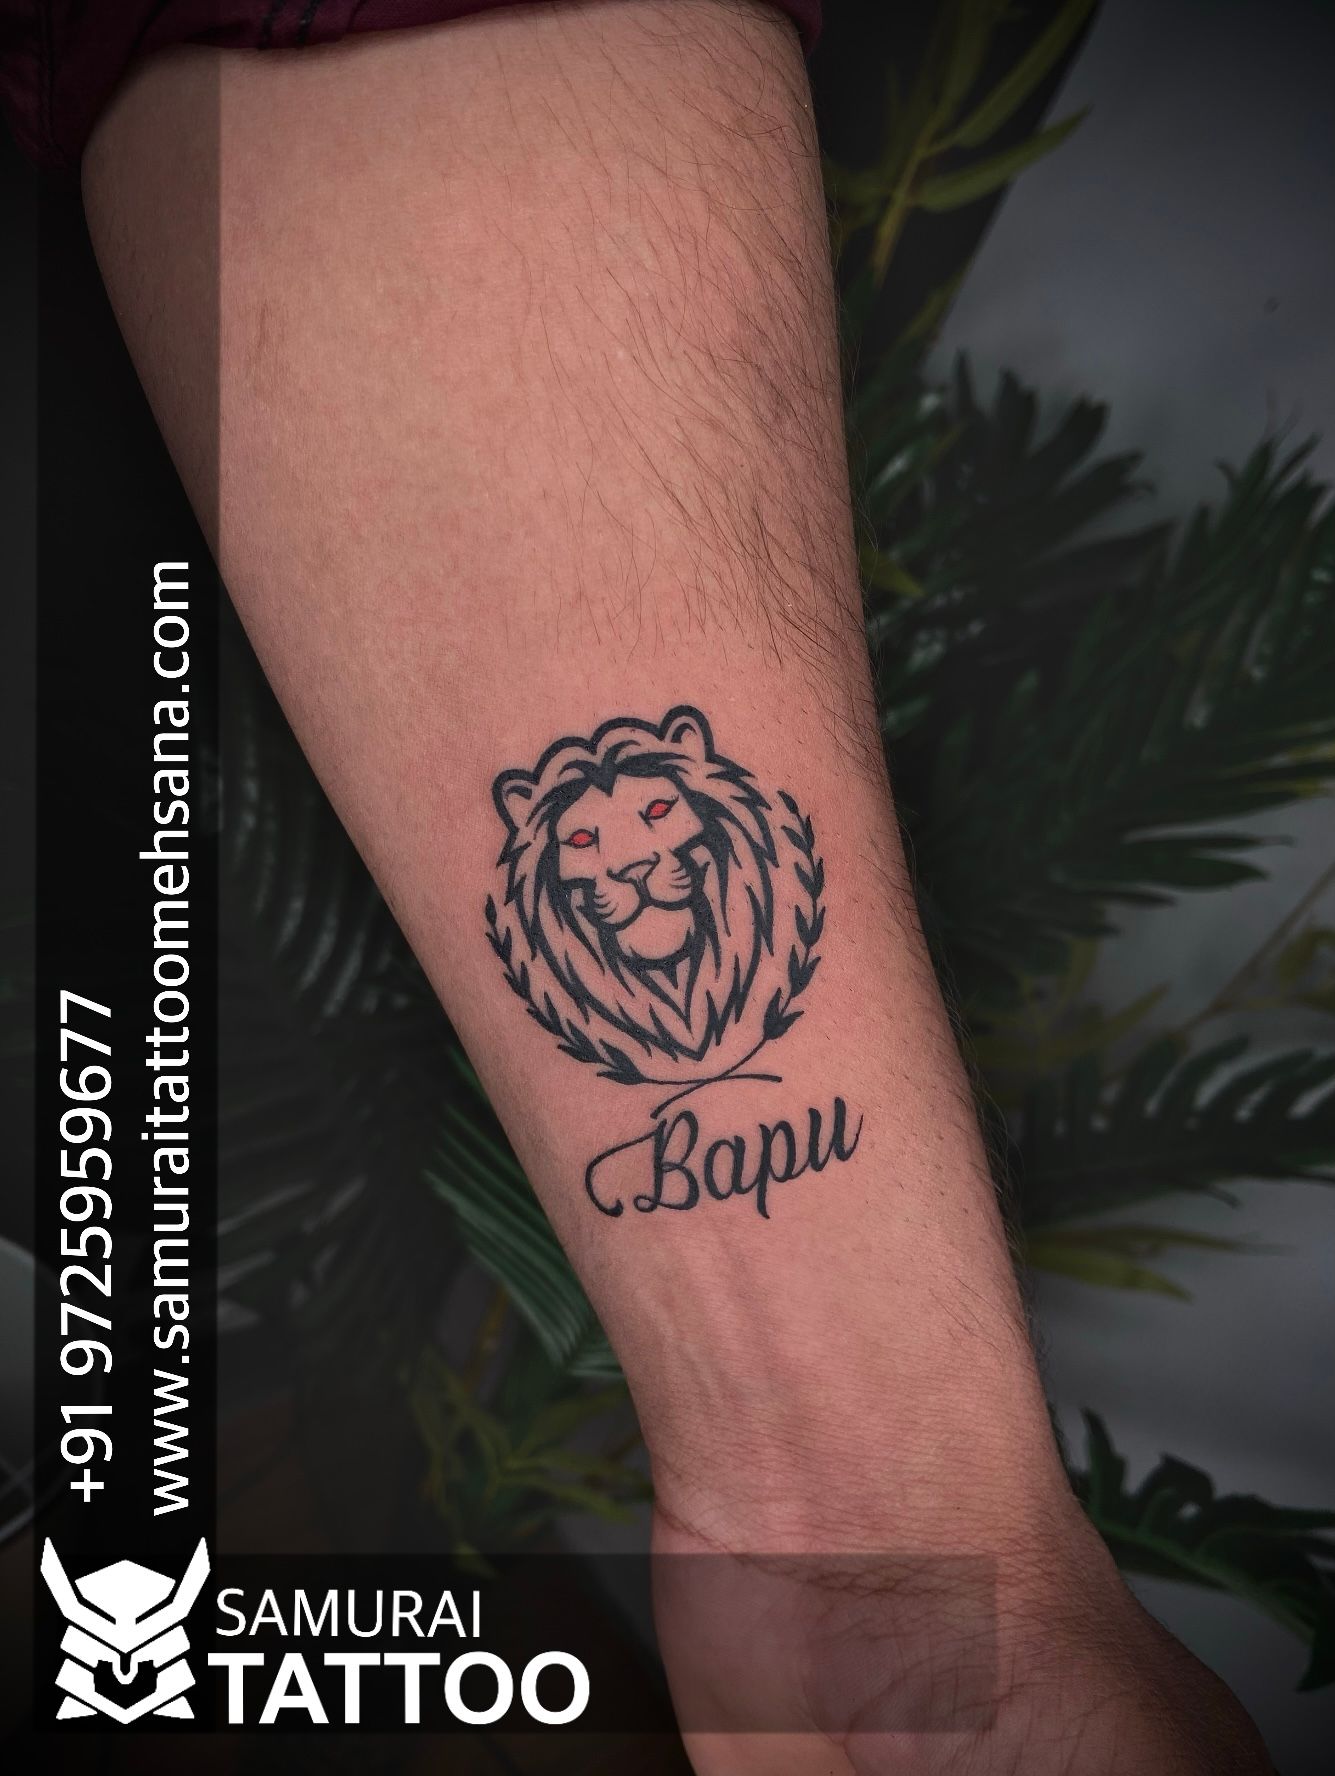 Pin by Daniel Santos Brito on daniel | Forearm band tattoos, Band tattoos  for men, Arm band tattoo